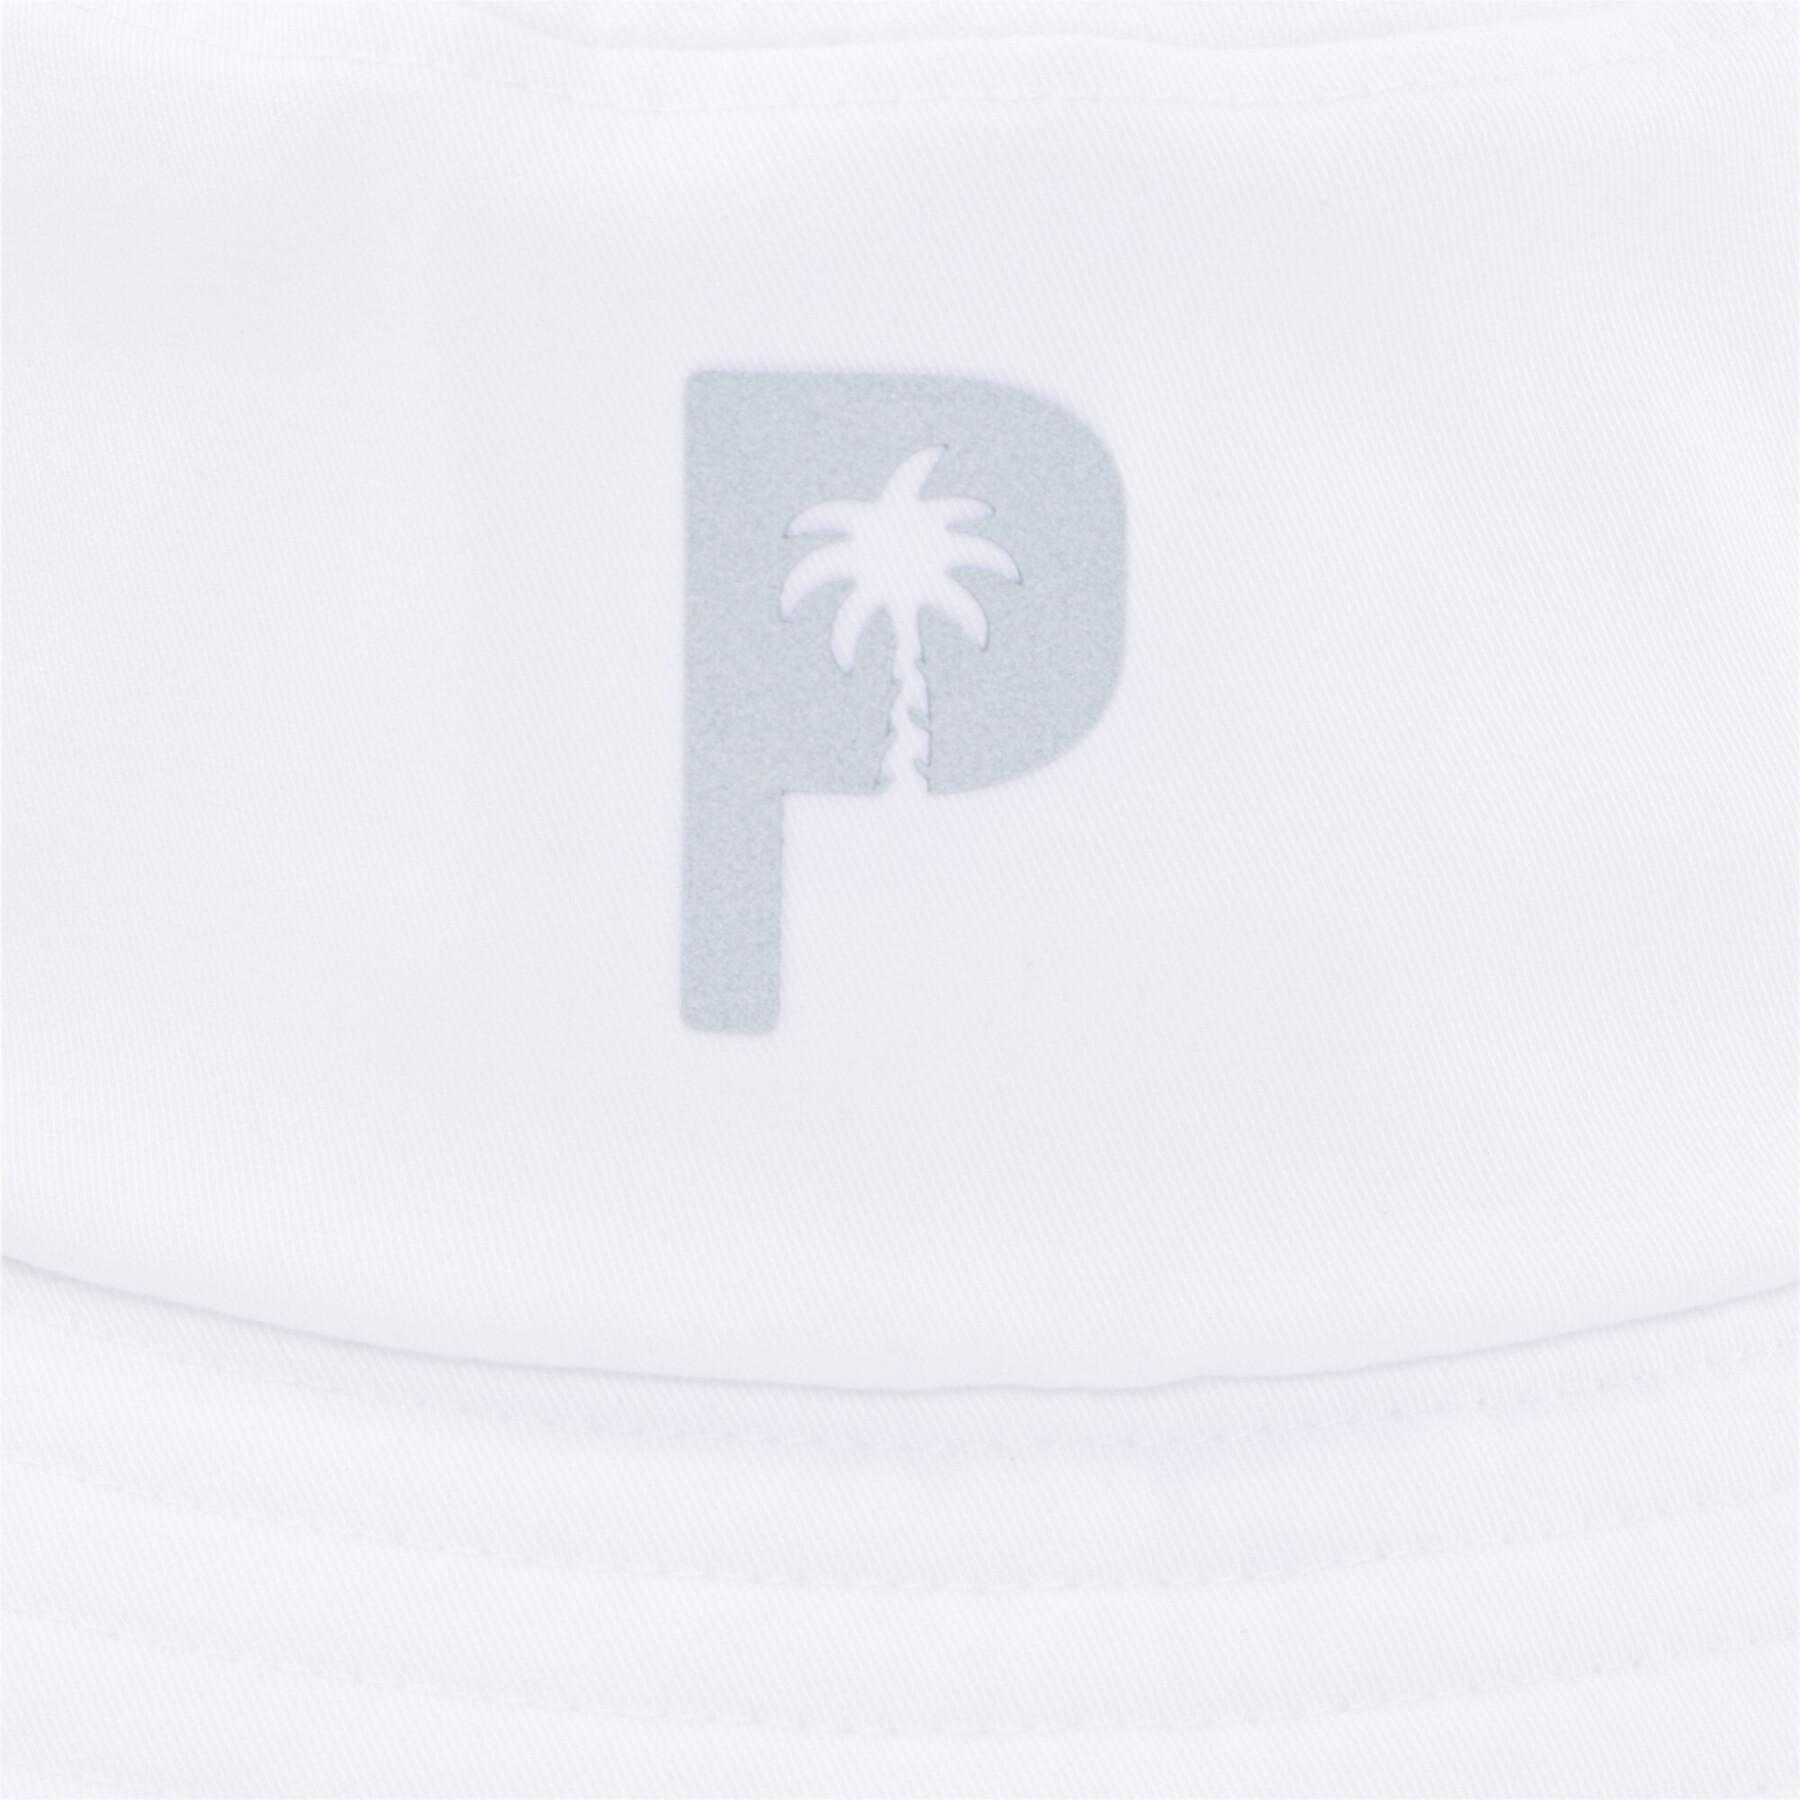 Puma PTC adult bucket hat white